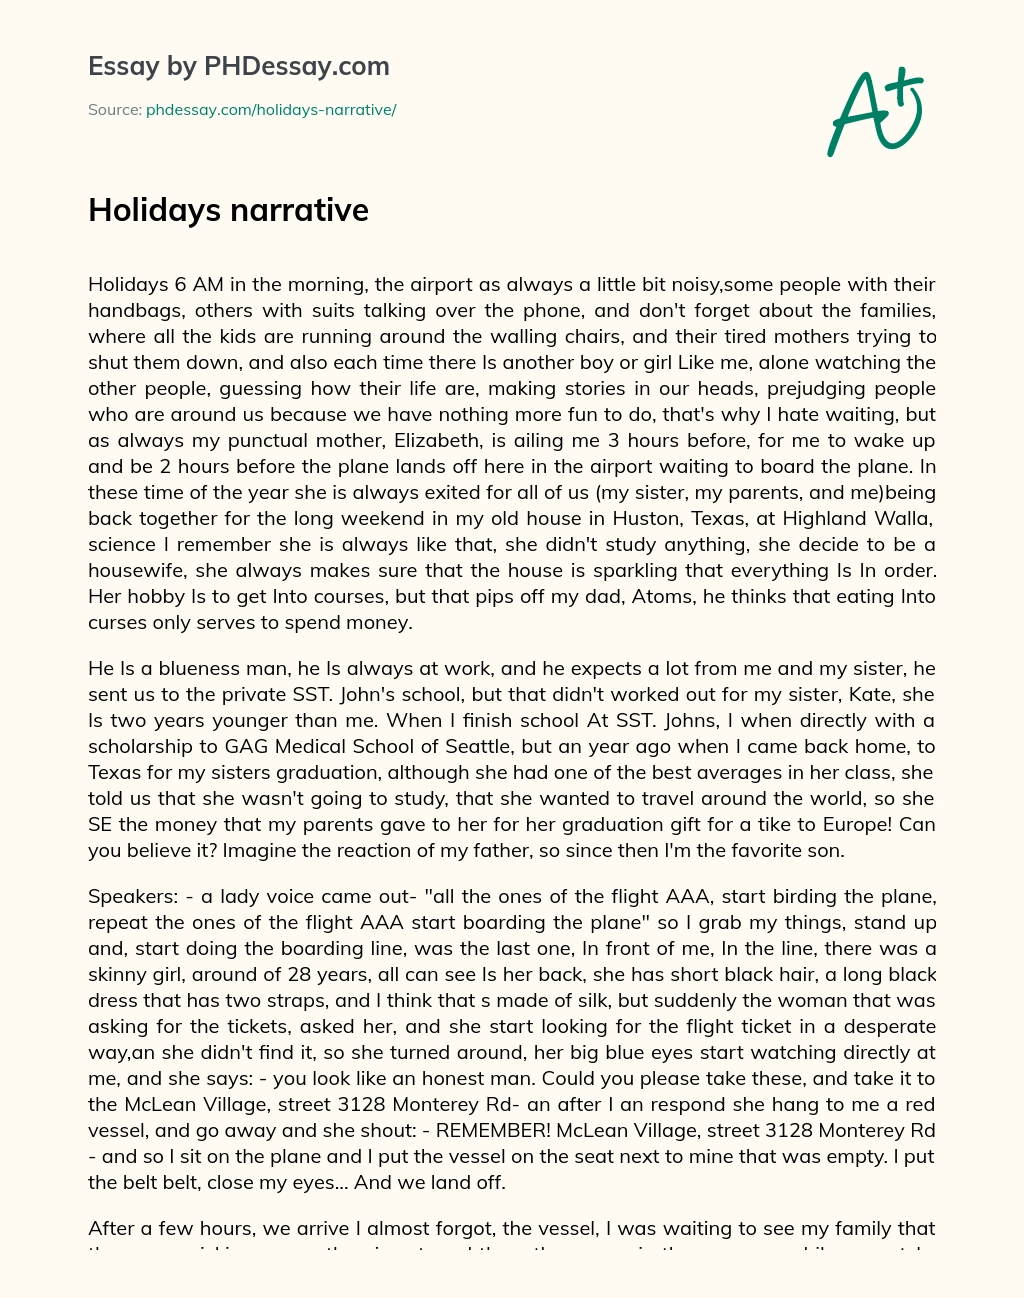 Holidays narrative essay